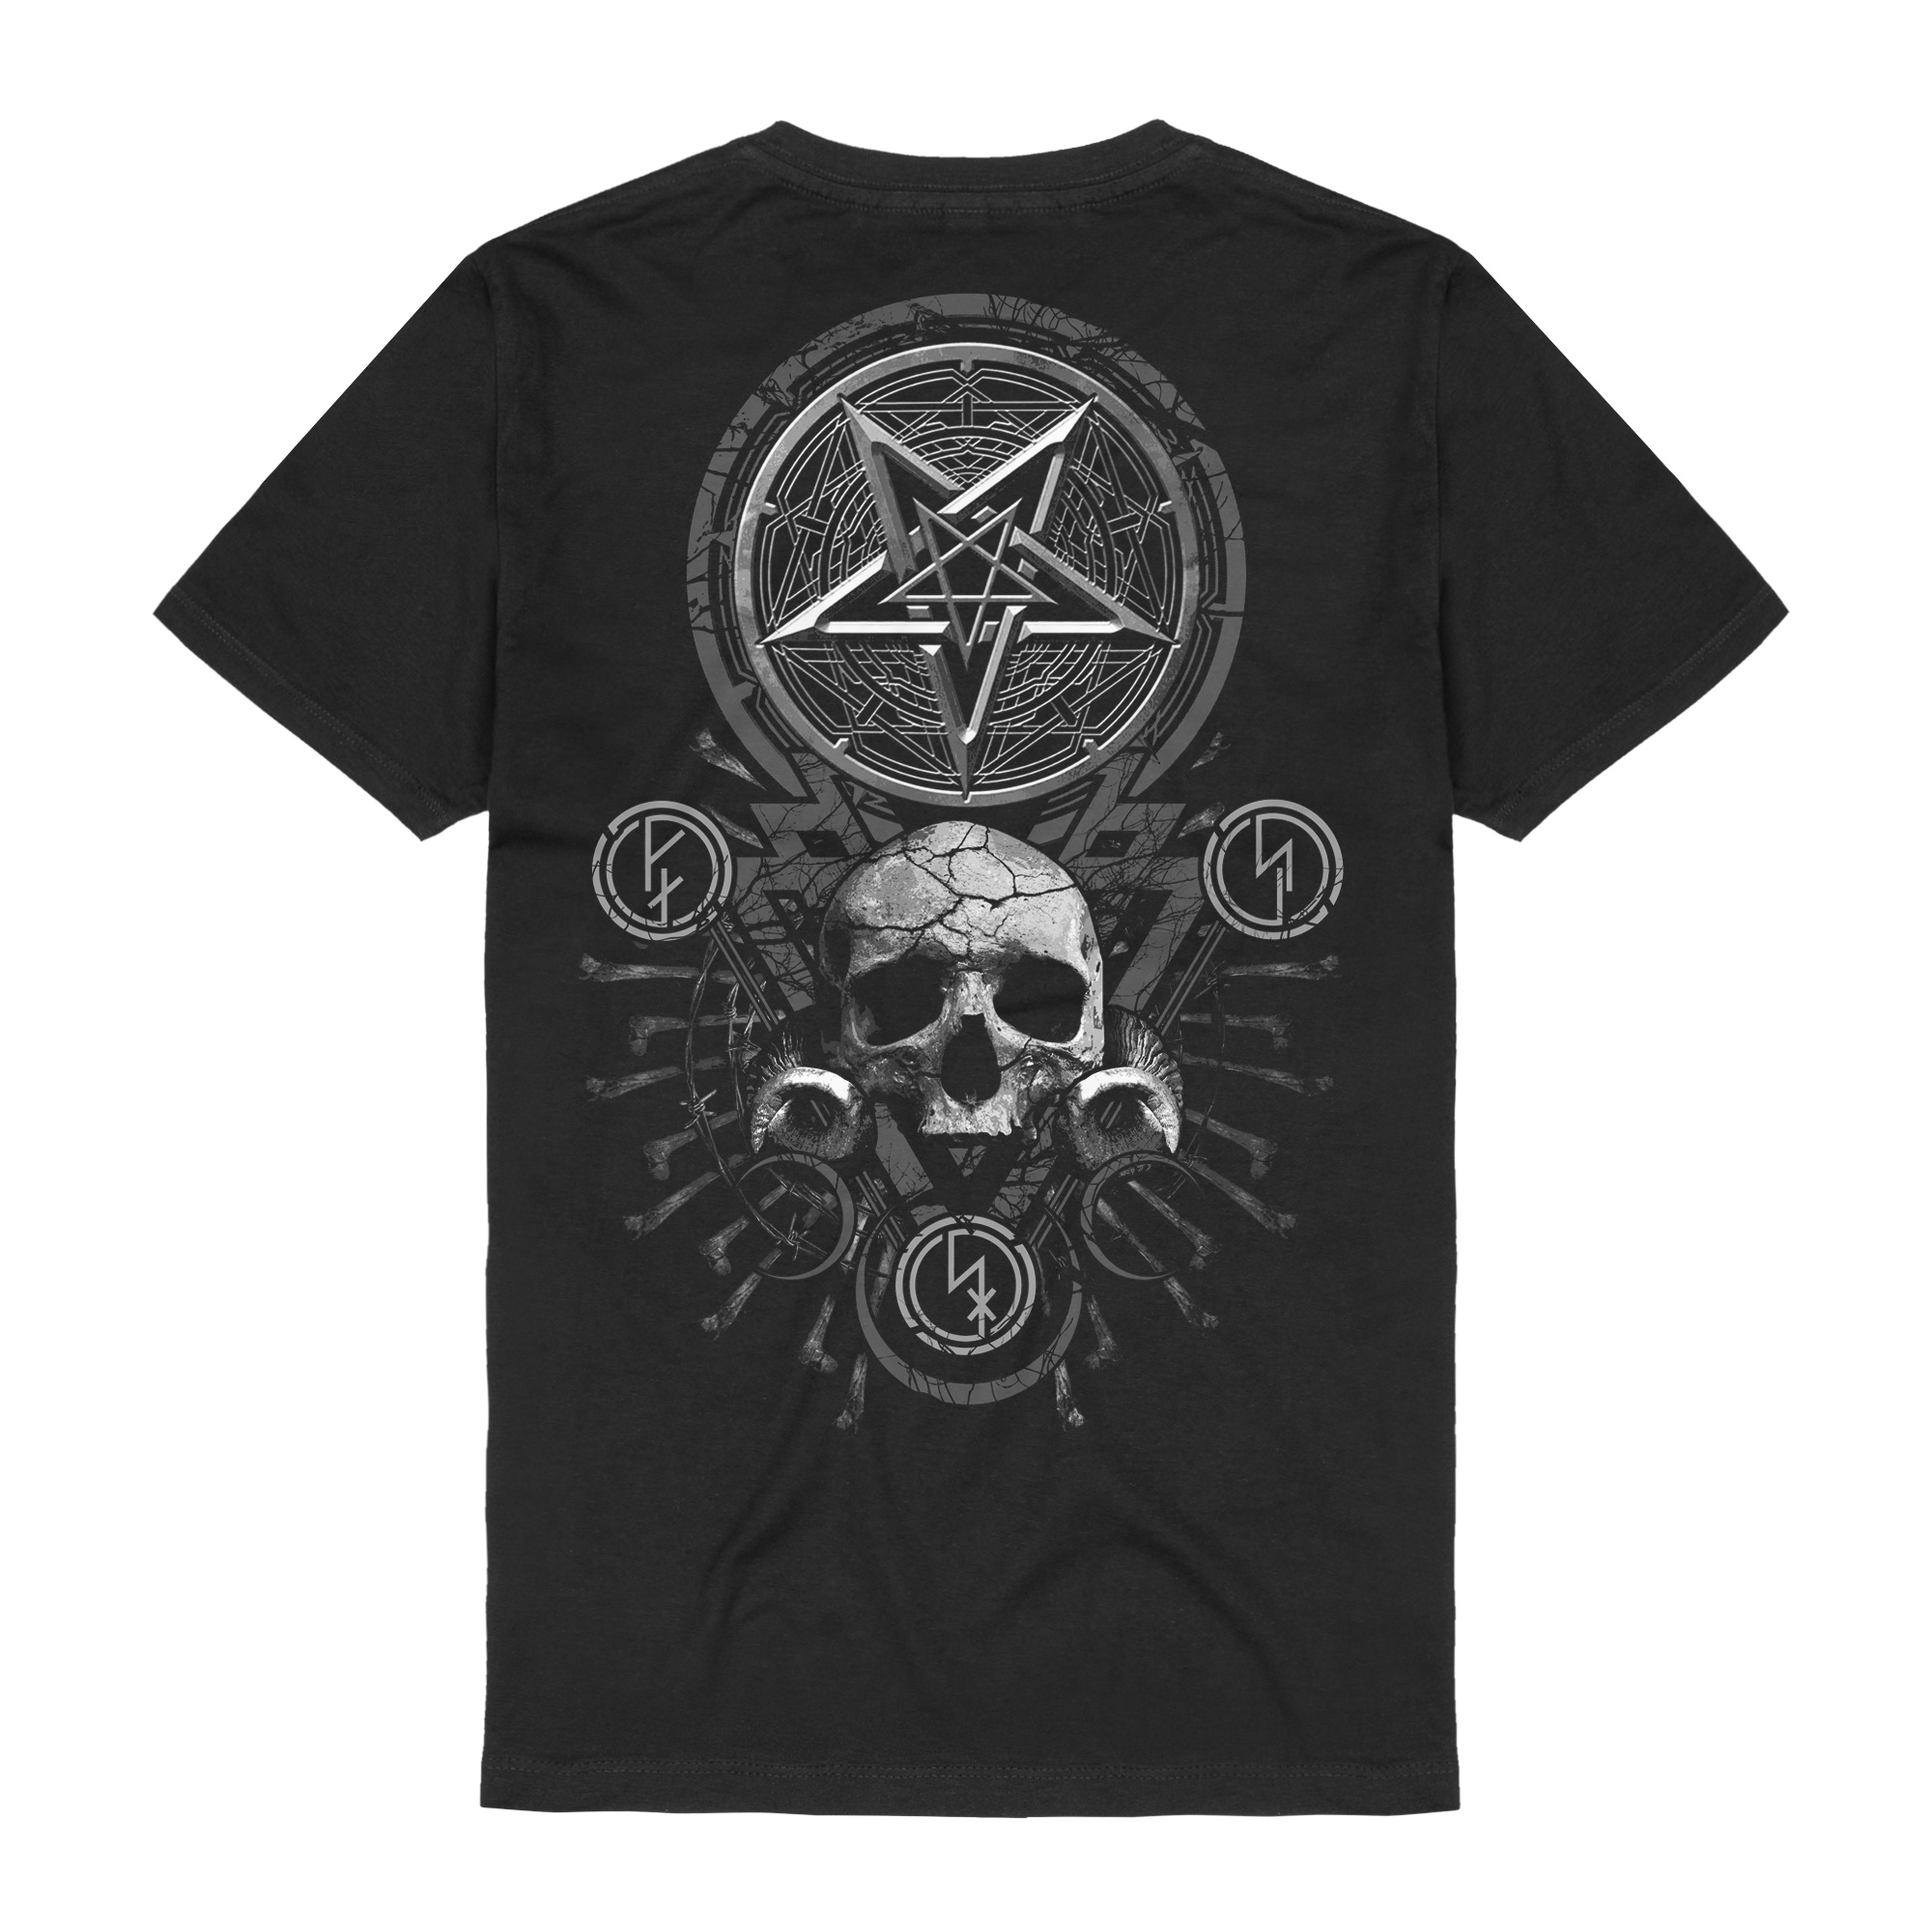 Dimmu Borgir Shop - Skull N Bones - Dimmu Borgir - T-Shirt